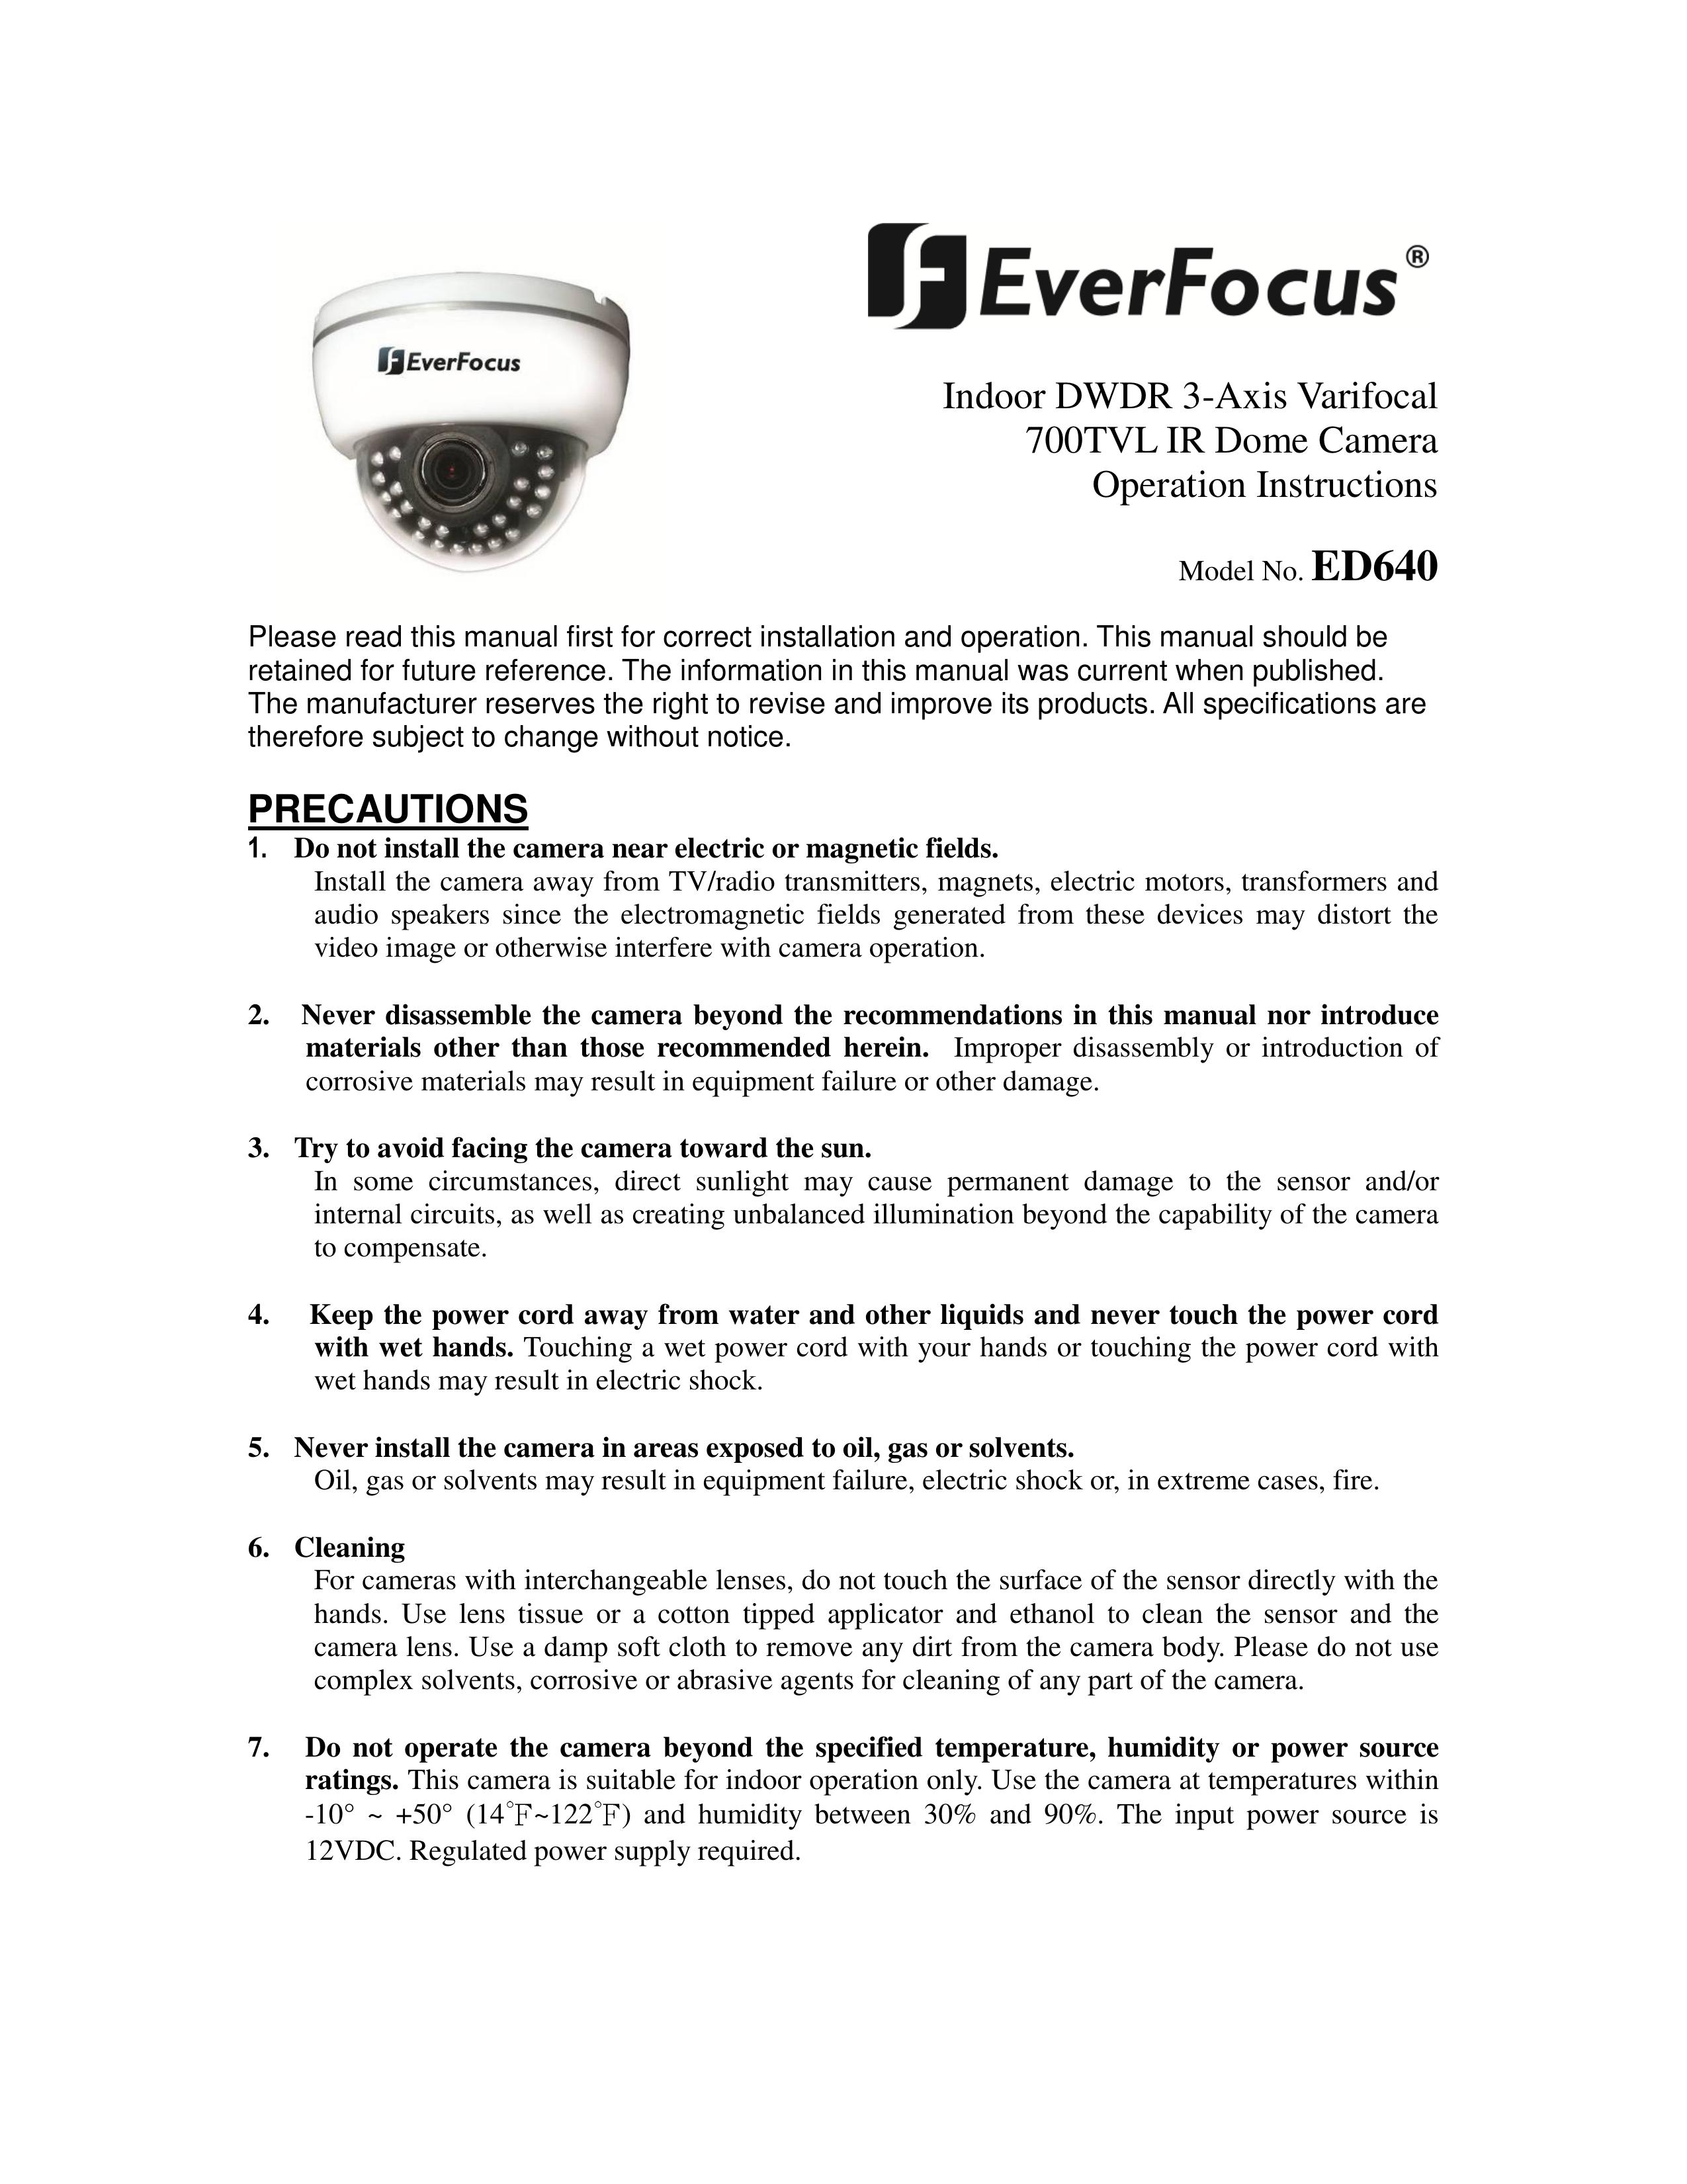 EverFocus ED640 Security Camera User Manual